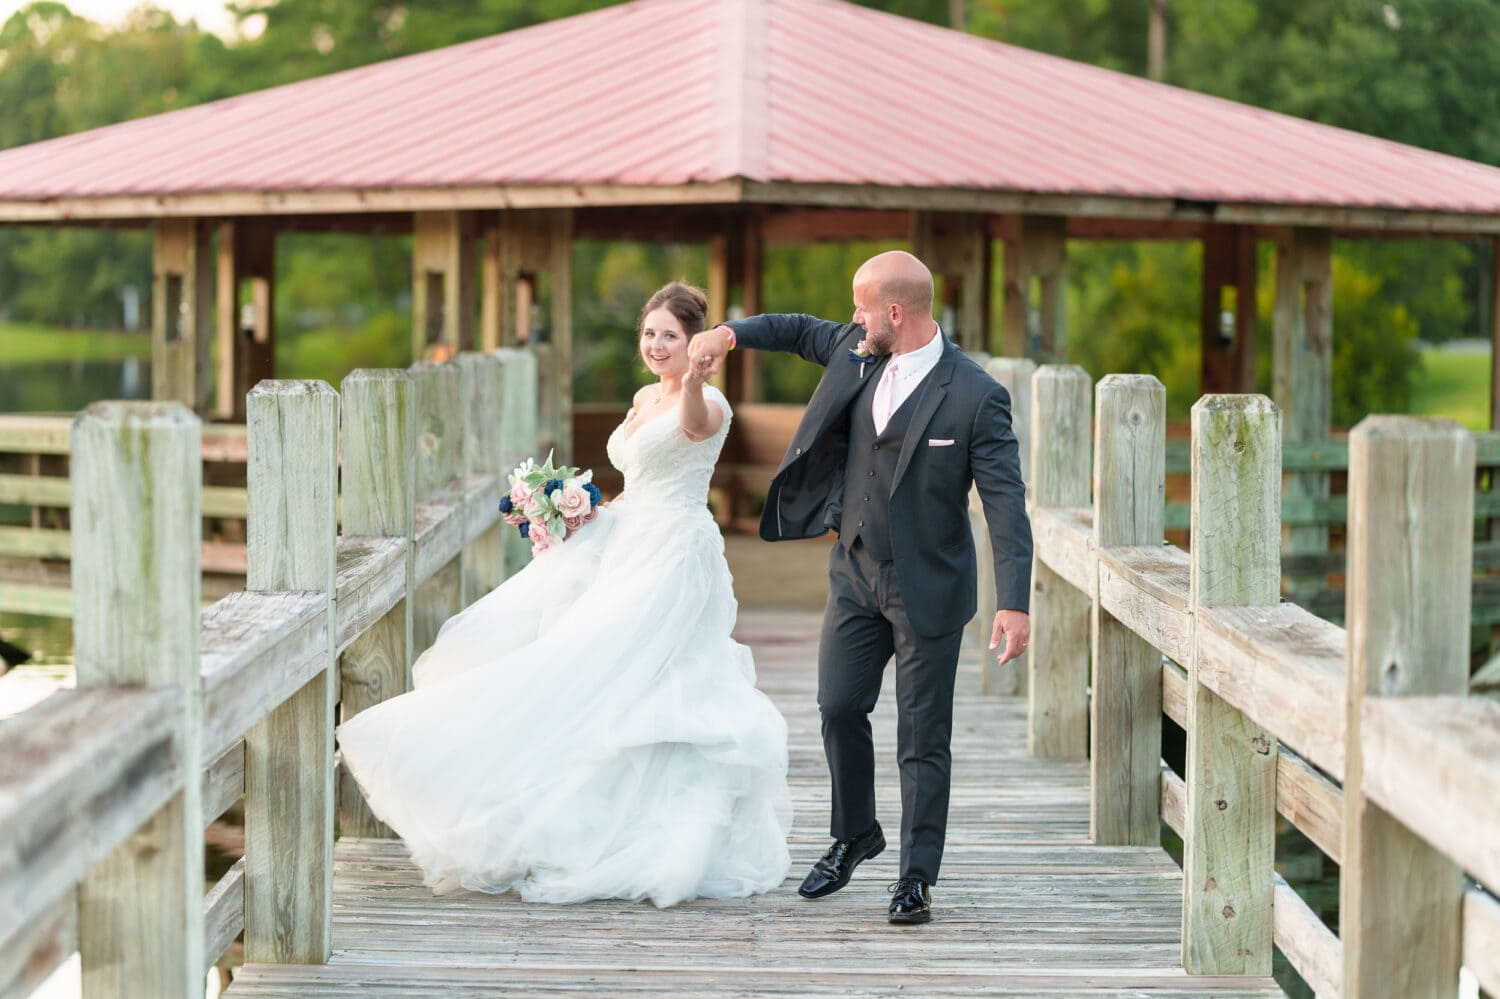 Spinning bride on the boardwalk - The Pavilion at Pepper Plantation